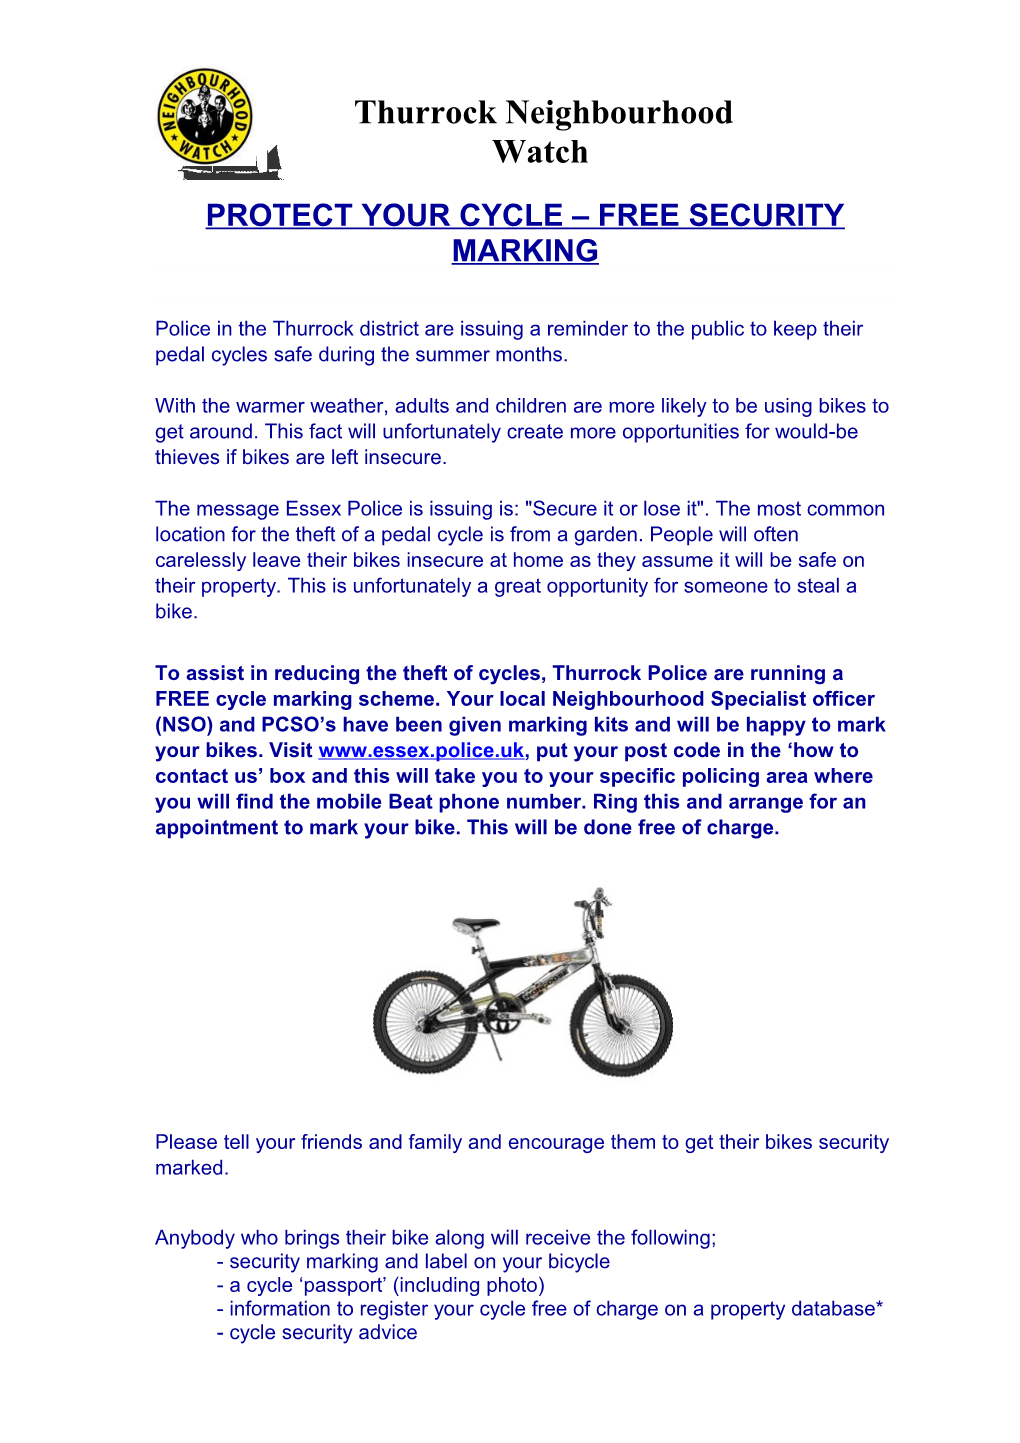 Theft of Bike